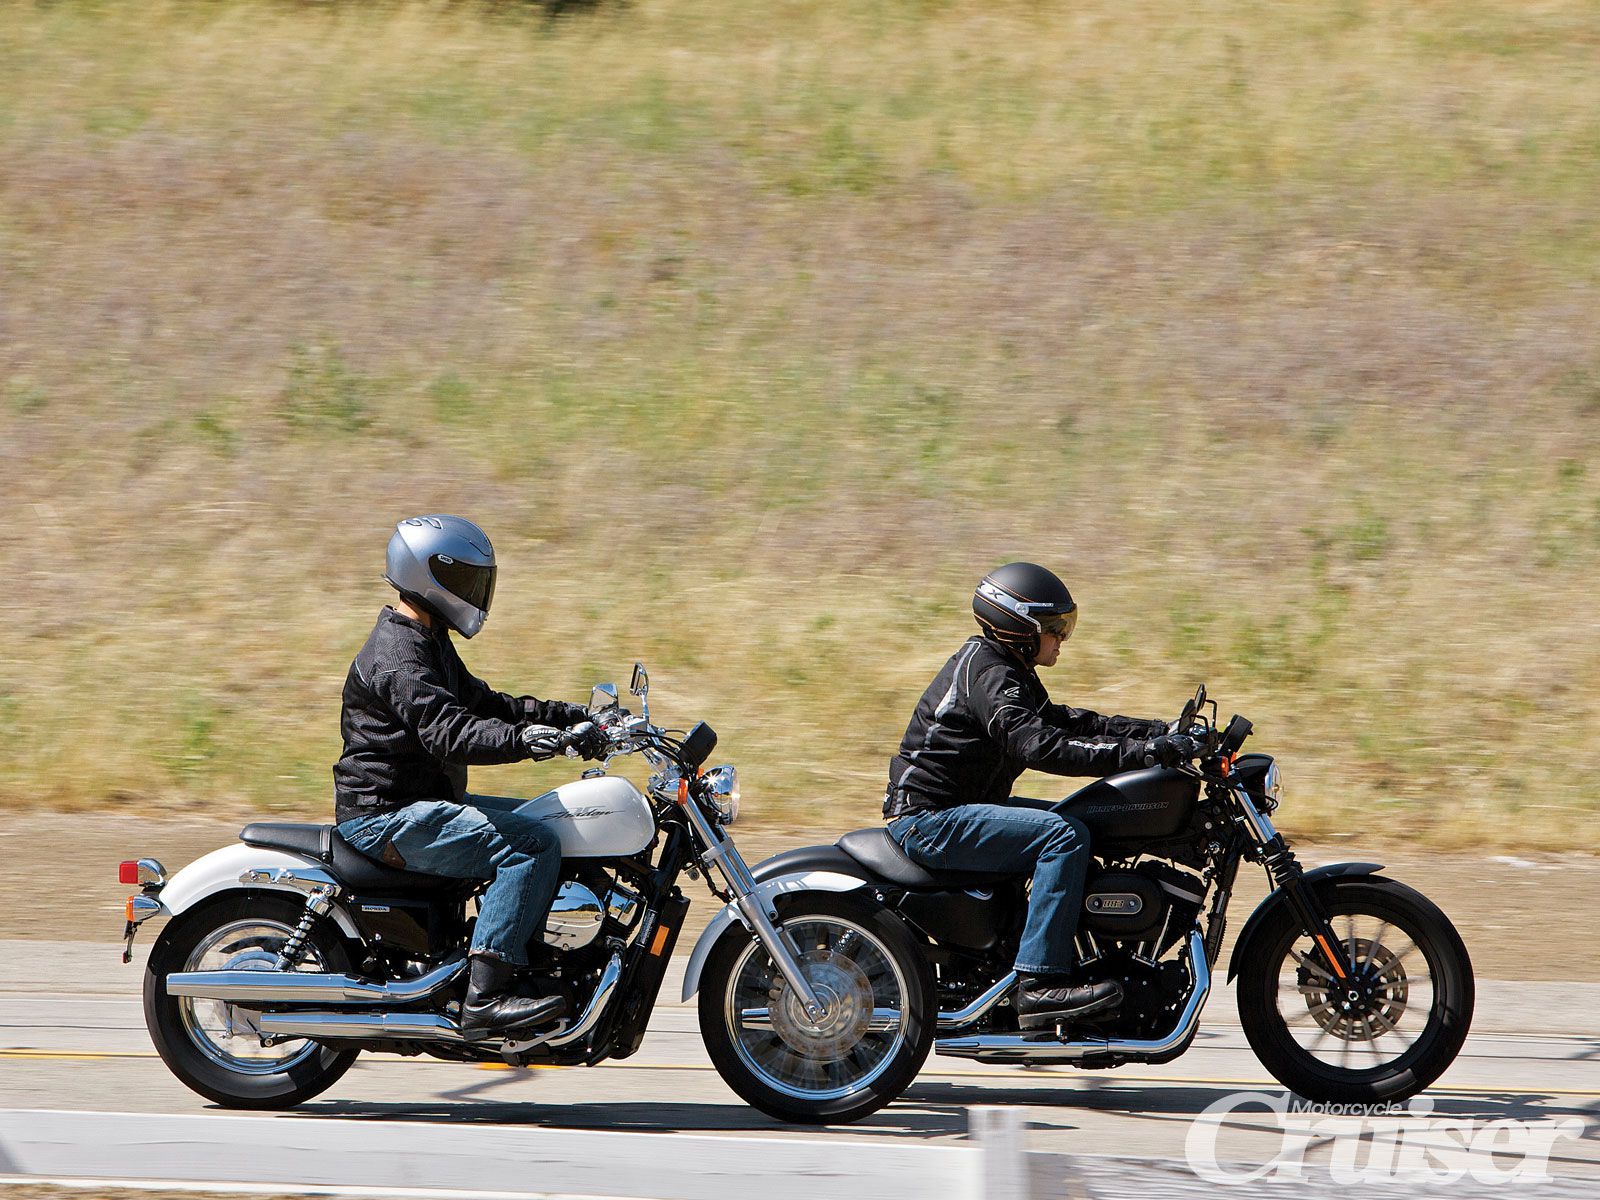 Harley Sportster Iron Vs Honda Shadow Rs Motorcycle Cruiser